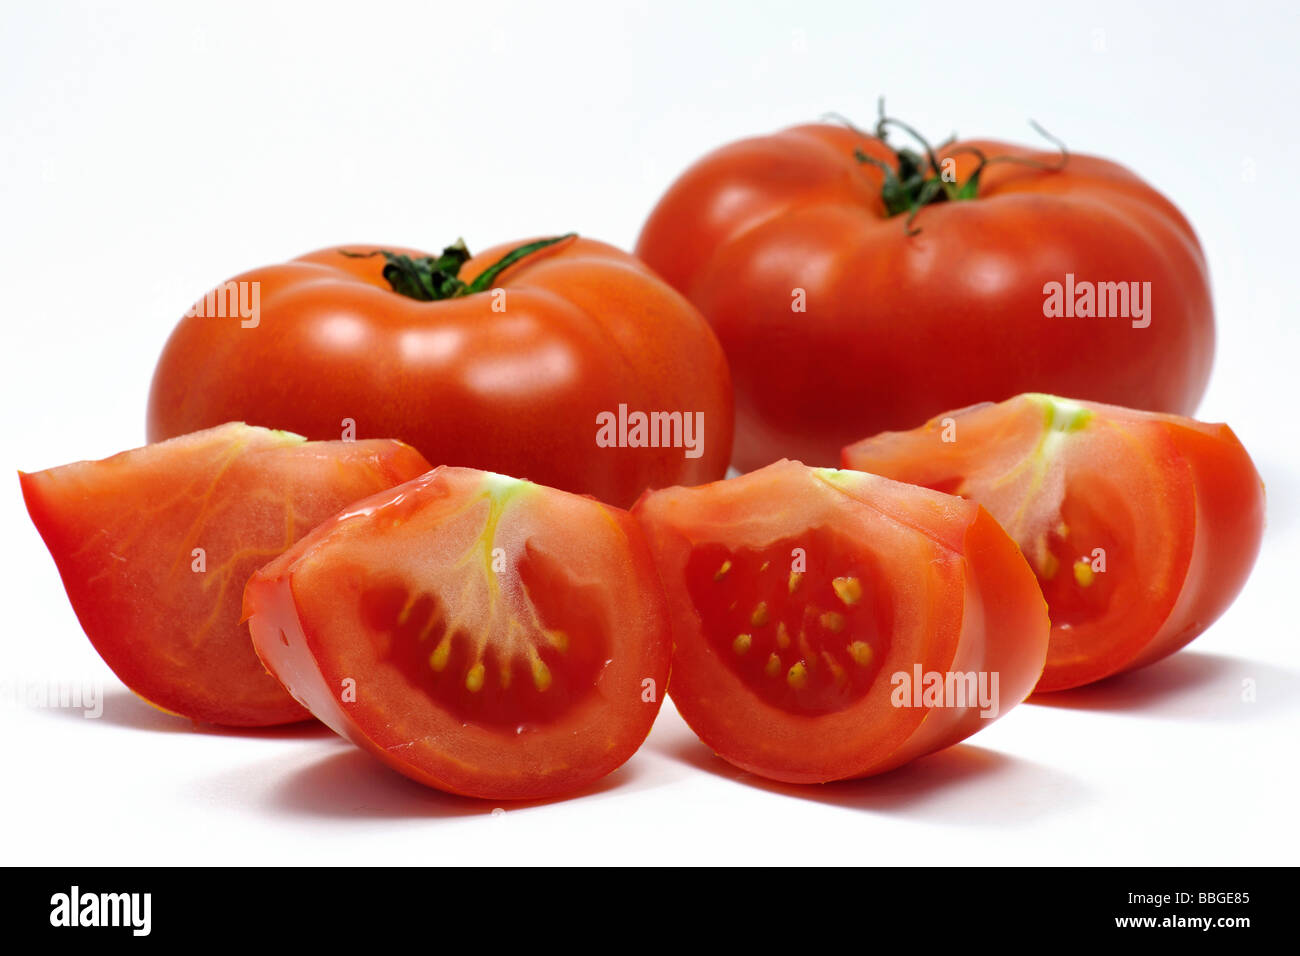 Tomates Tomates beefsteak ou boeuf Banque D'Images